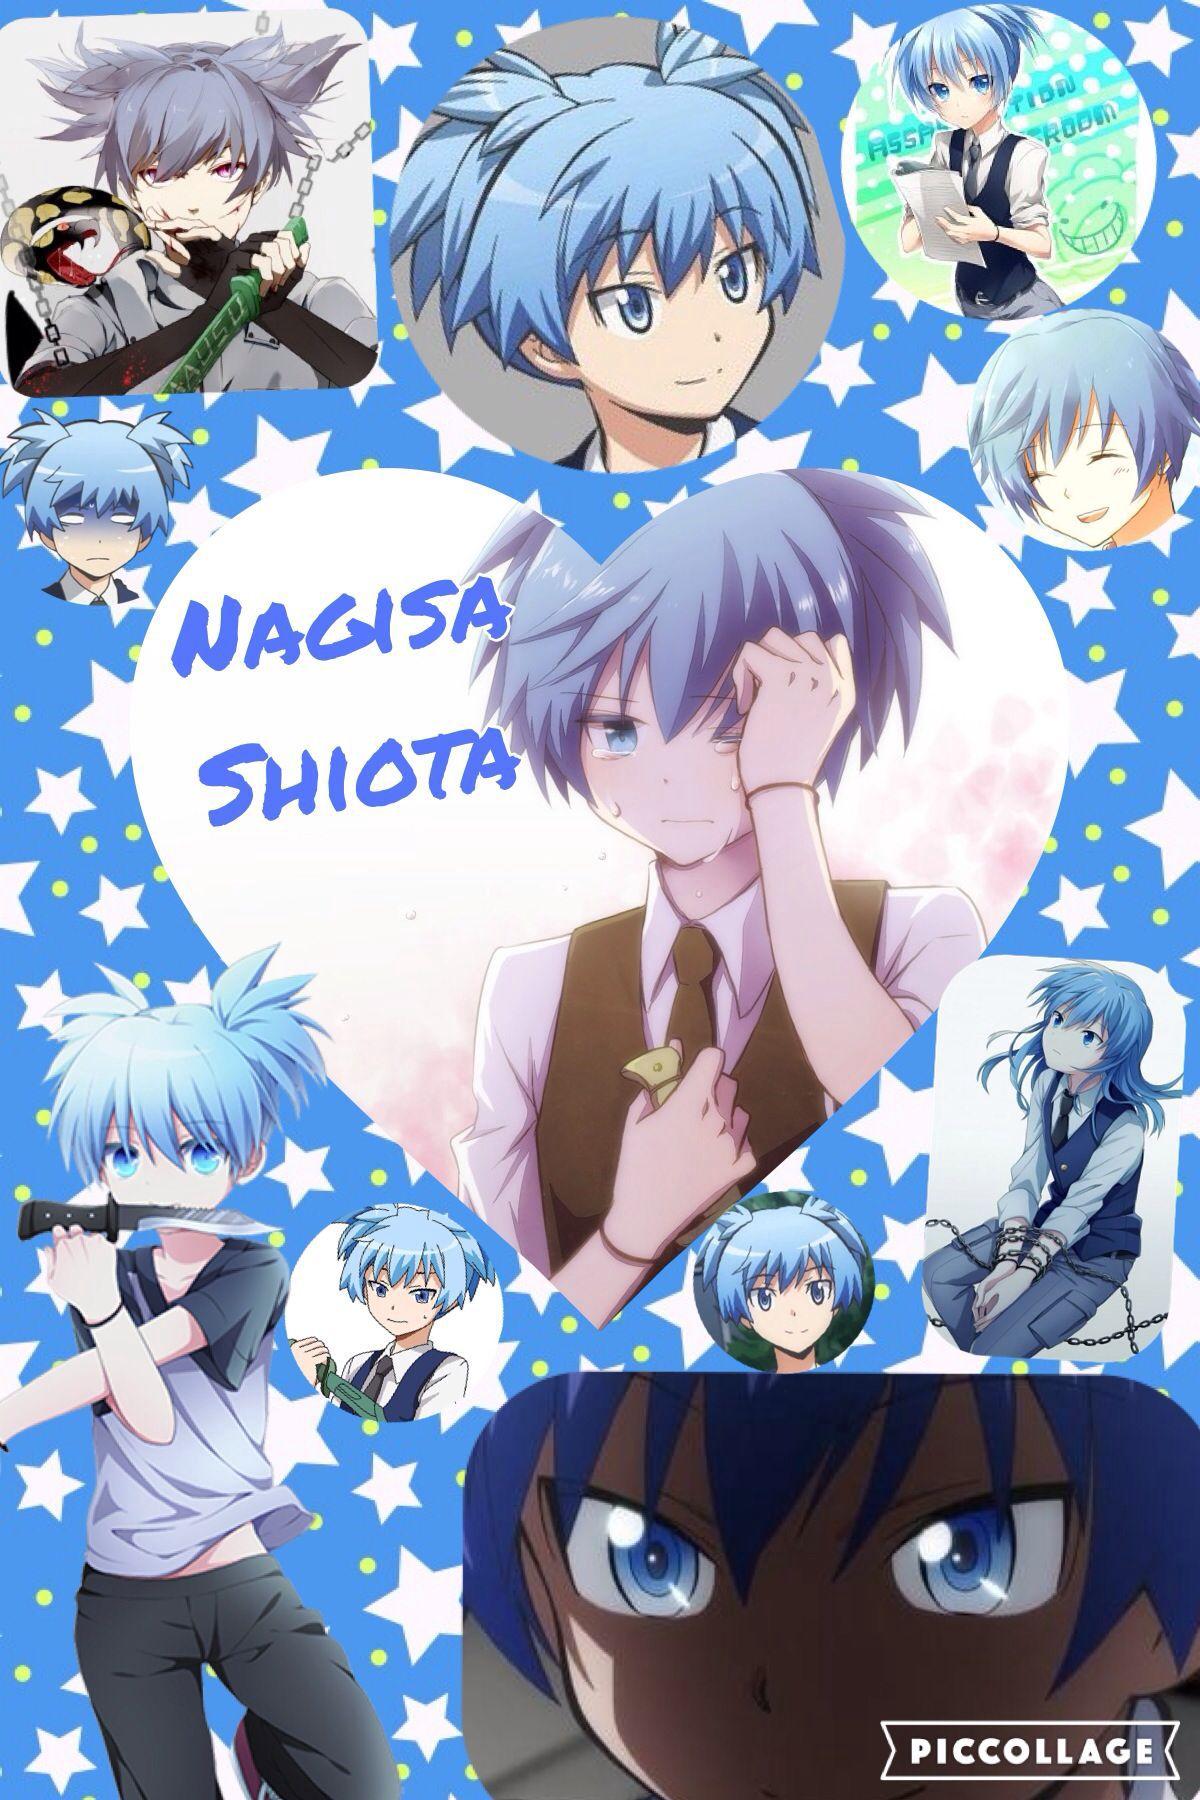 HD wallpaper Anime Assassination Classroom Nagisa Shiota  Wallpaper  Flare